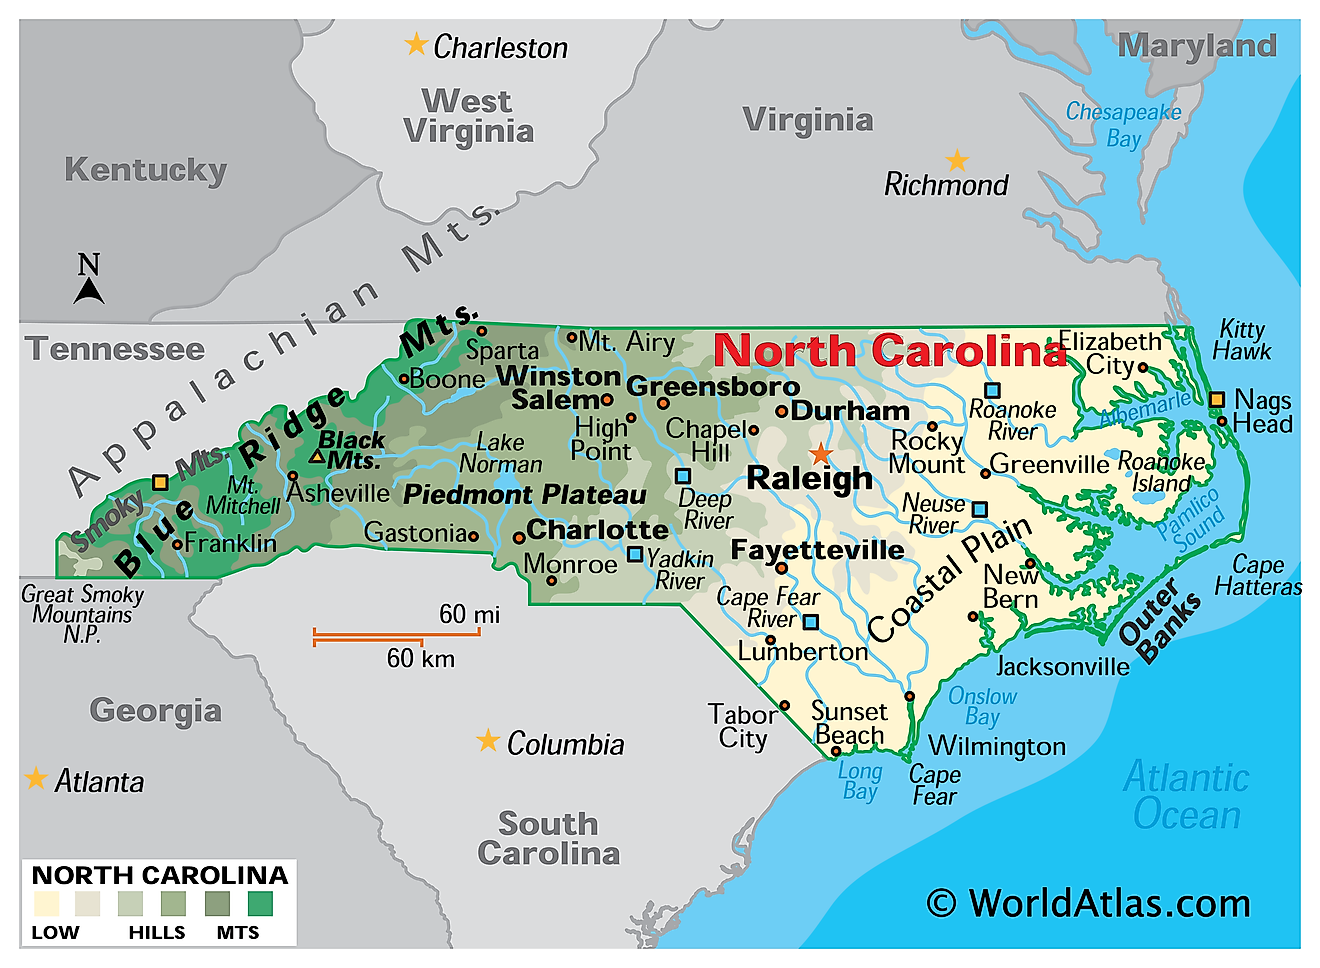 North Carolina maps and facts